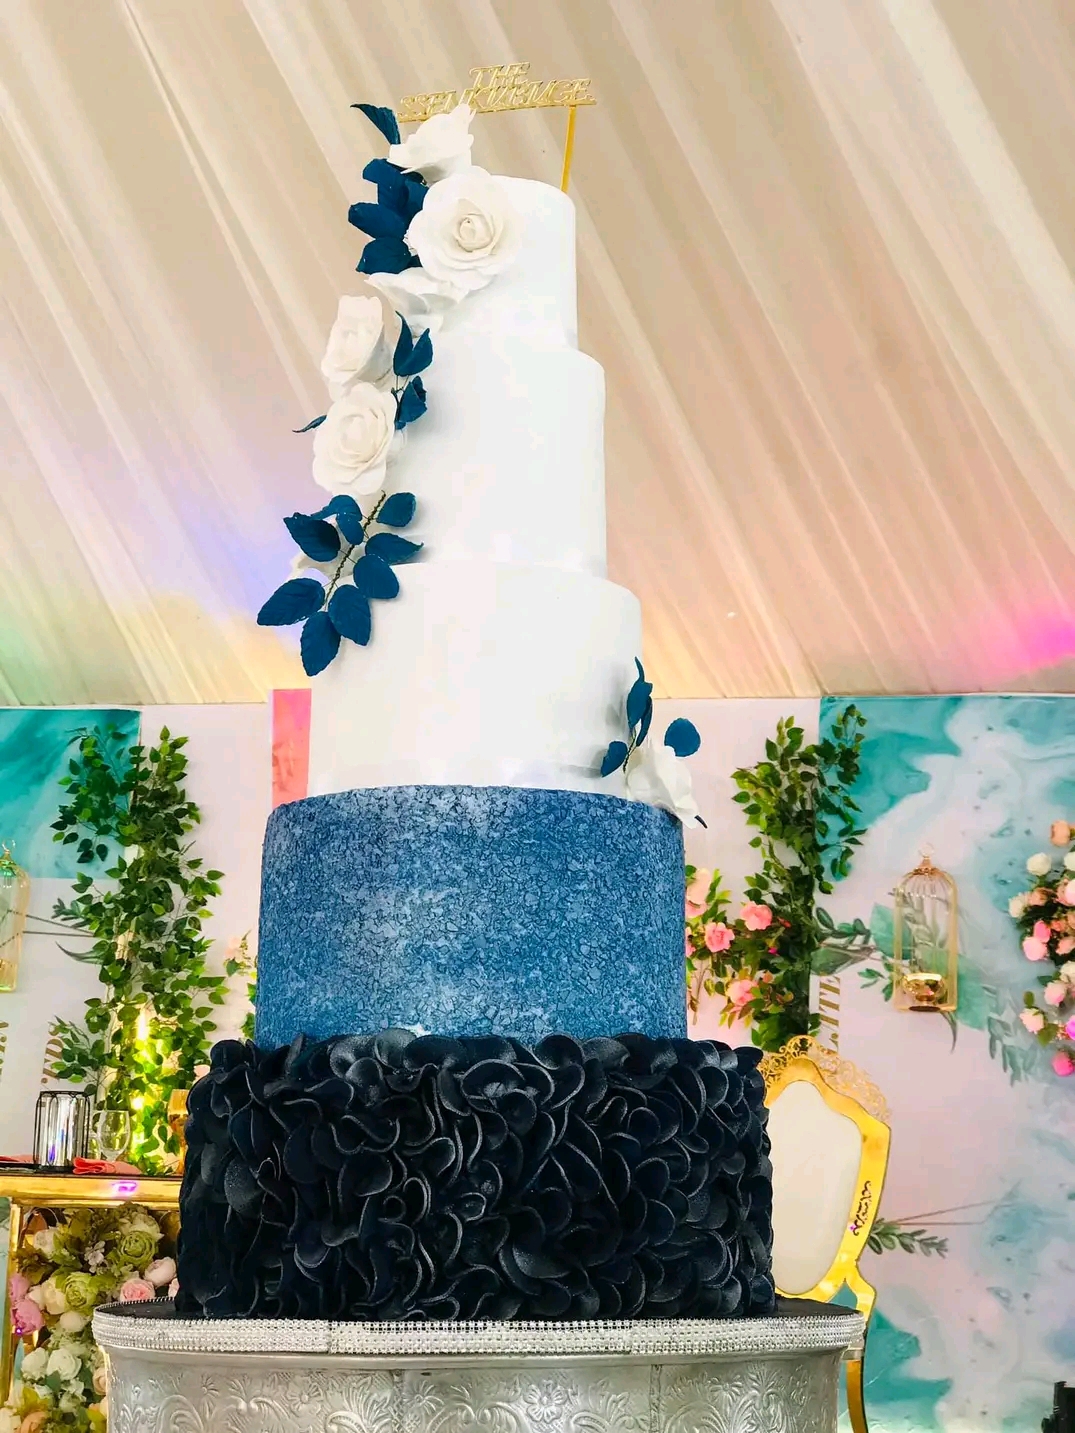 BLACK, BLUE AND WHITE WEDDING CAKE 